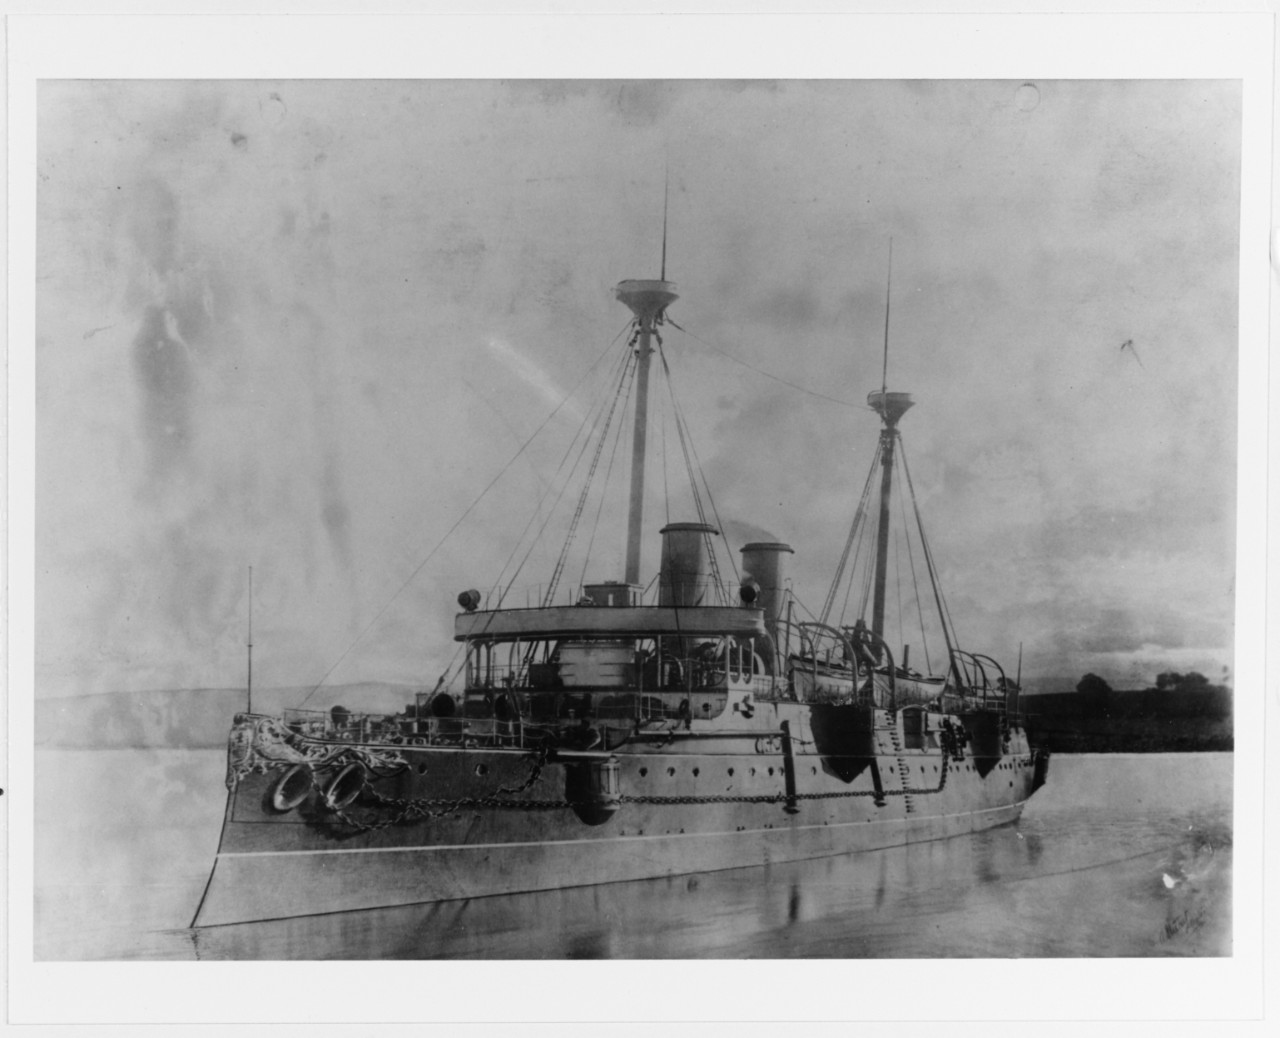 REINA REGENTE (Spanish protected cruiser, 1887-1895)